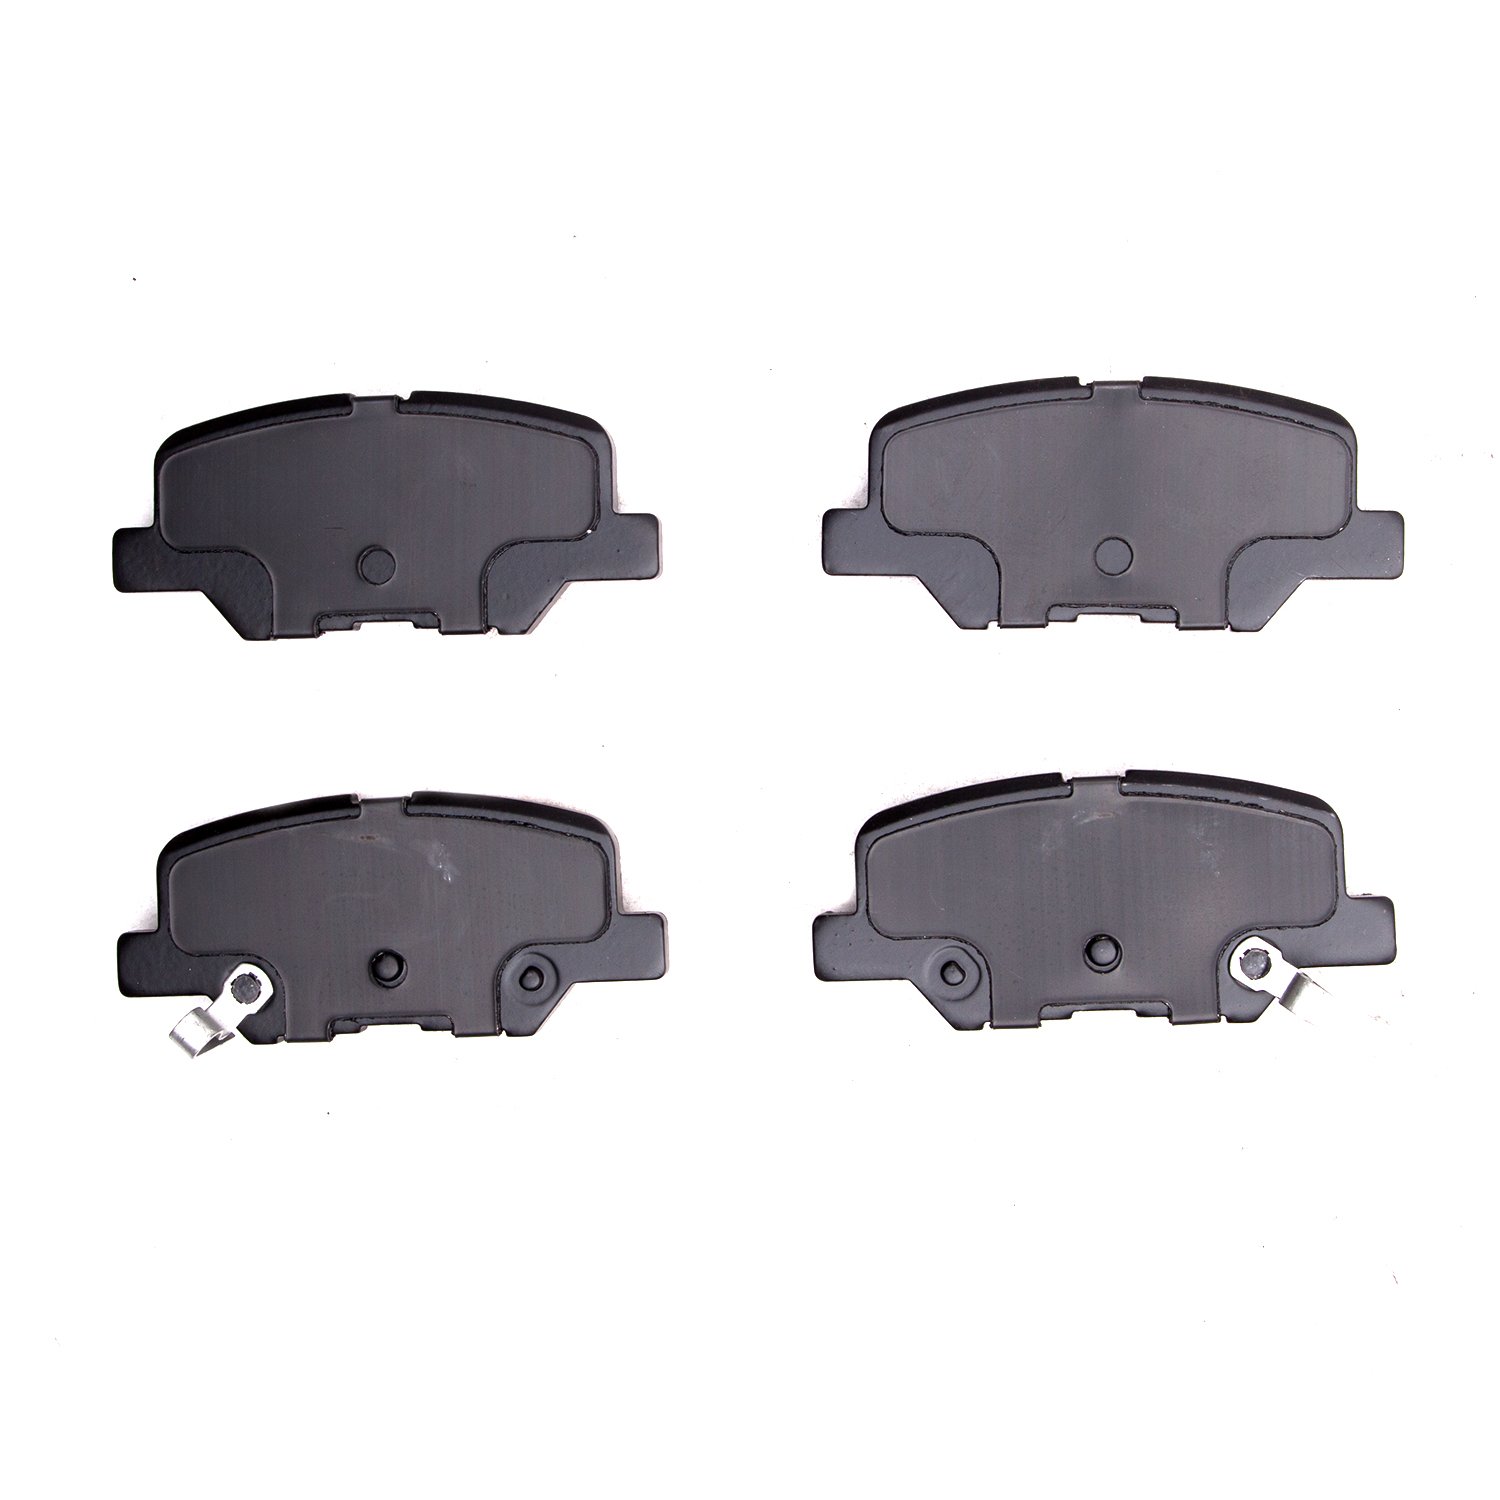 1551-1679-00 5000 Advanced Ceramic Brake Pads, Fits Select Multiple Makes/Models, Position: Rear